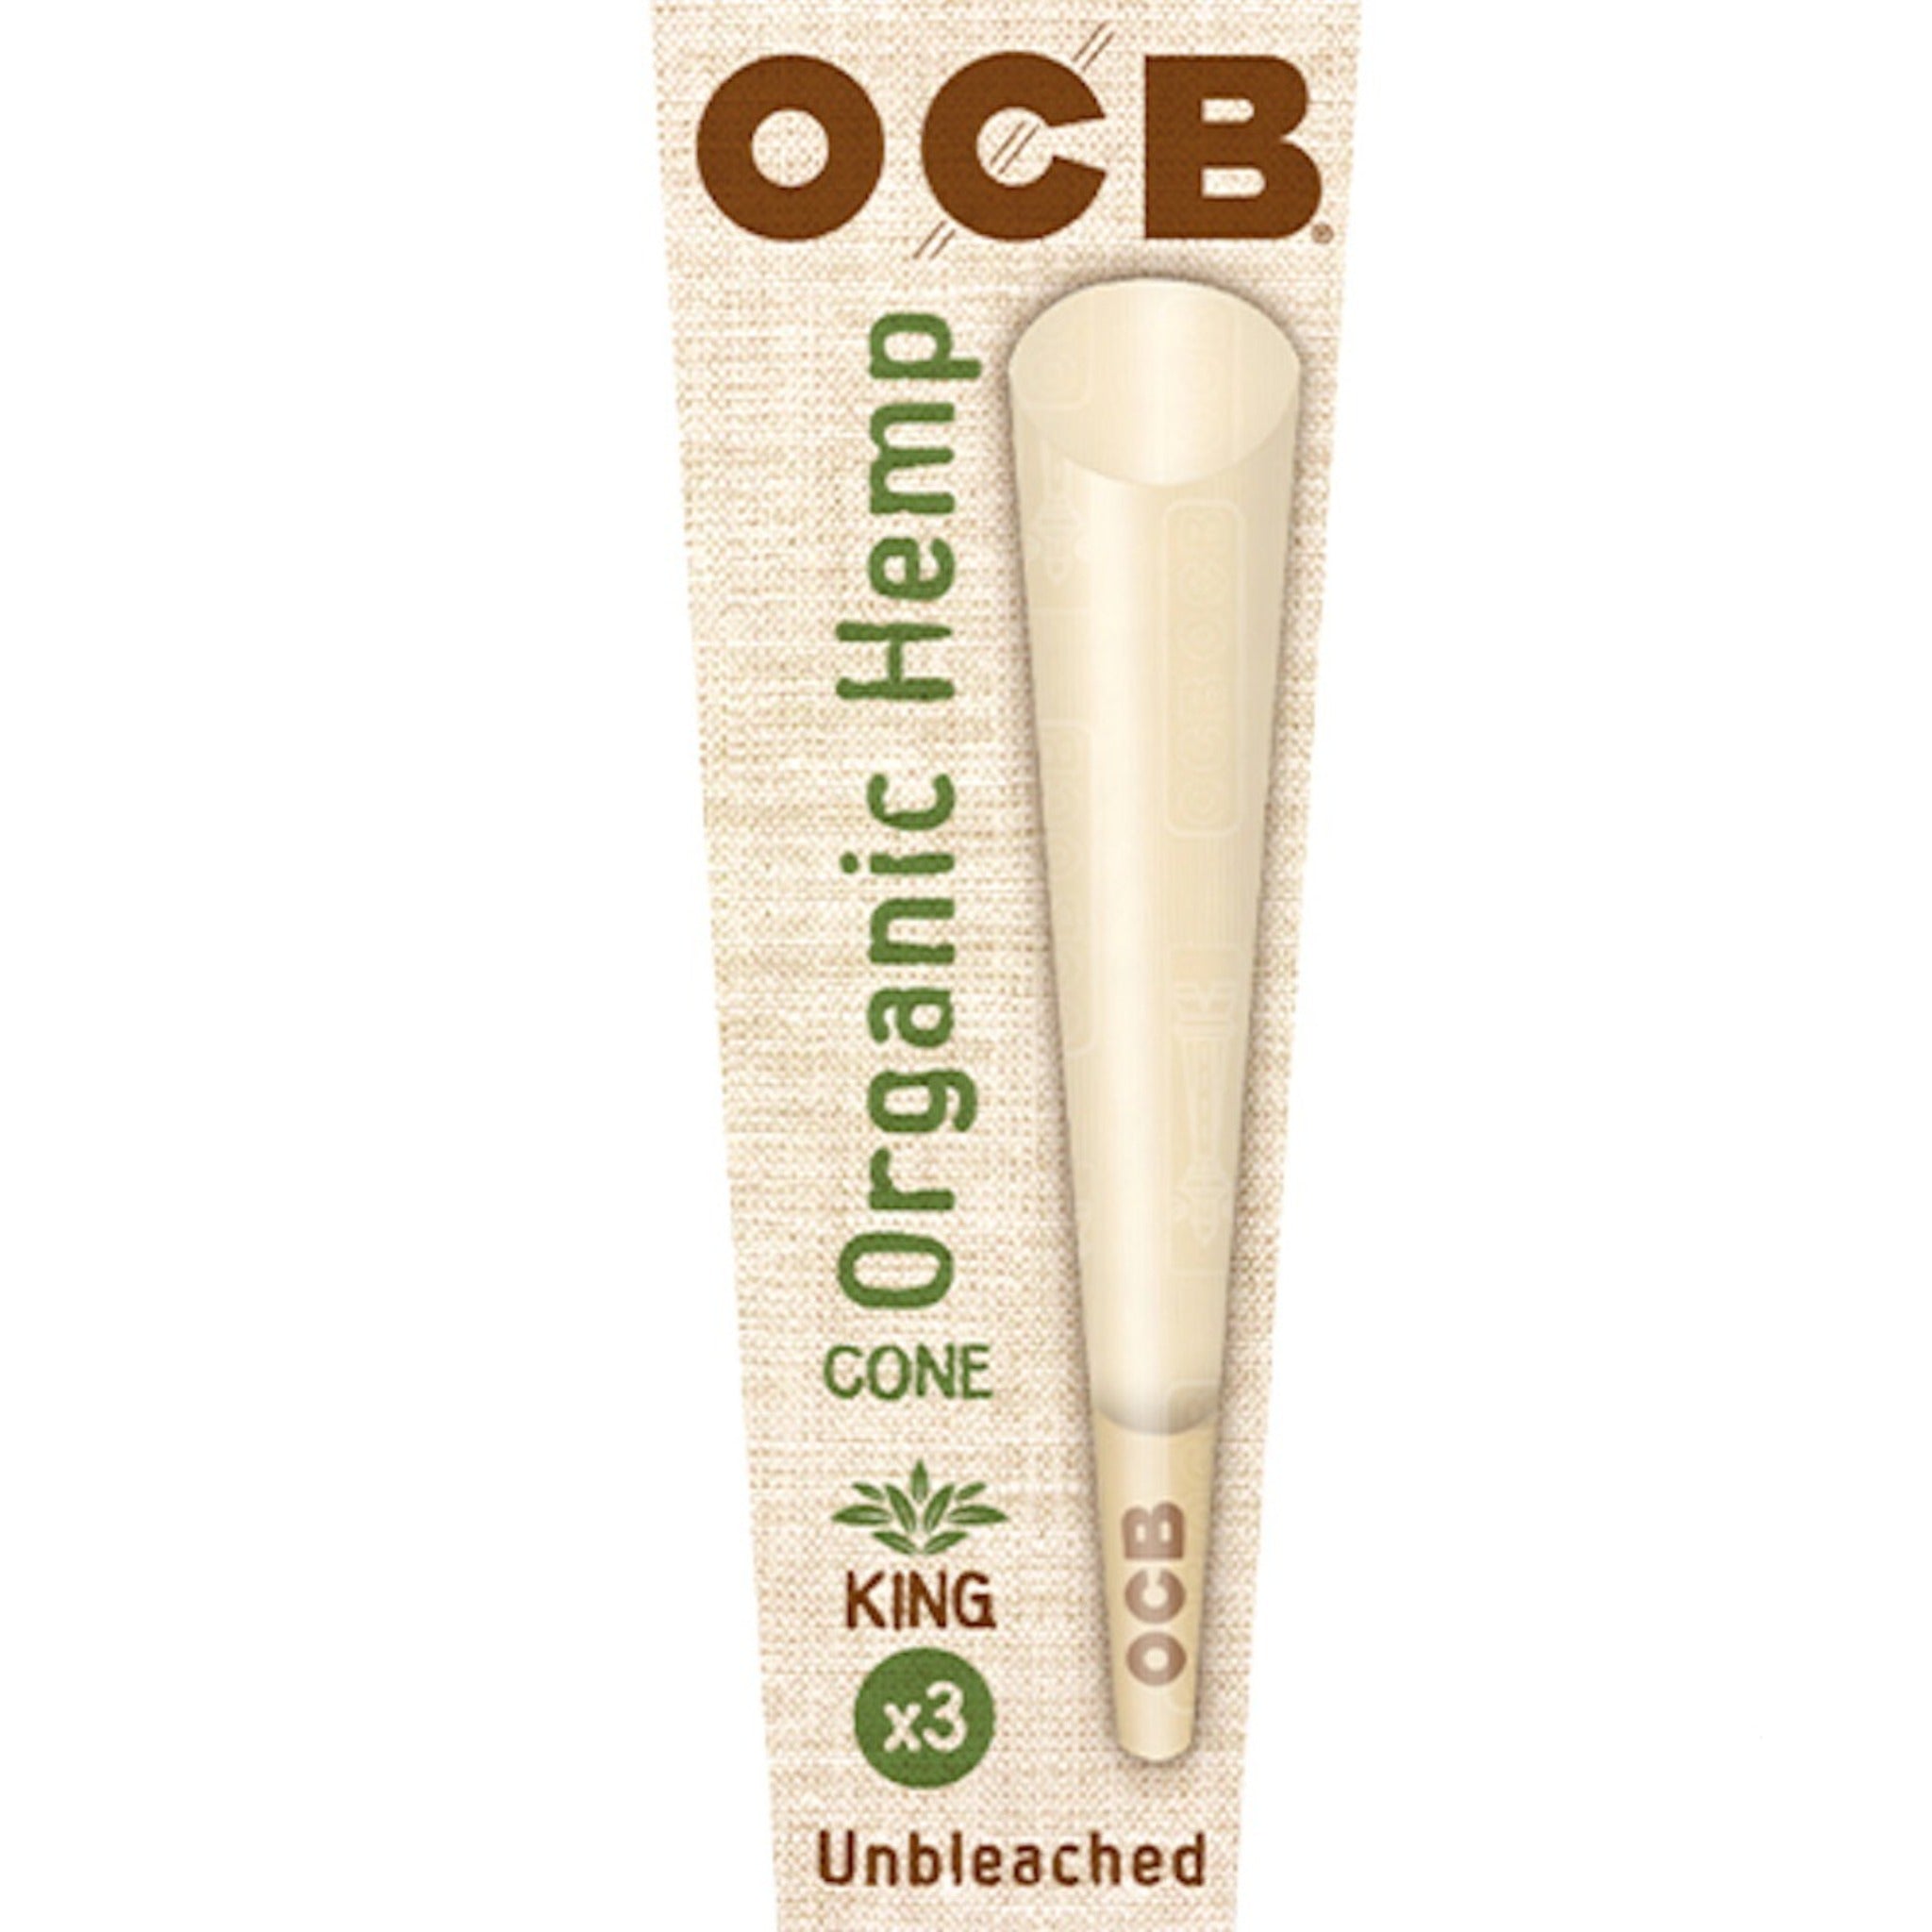 OCB Unbleached Organic Hemp Cones King (3 Pack)